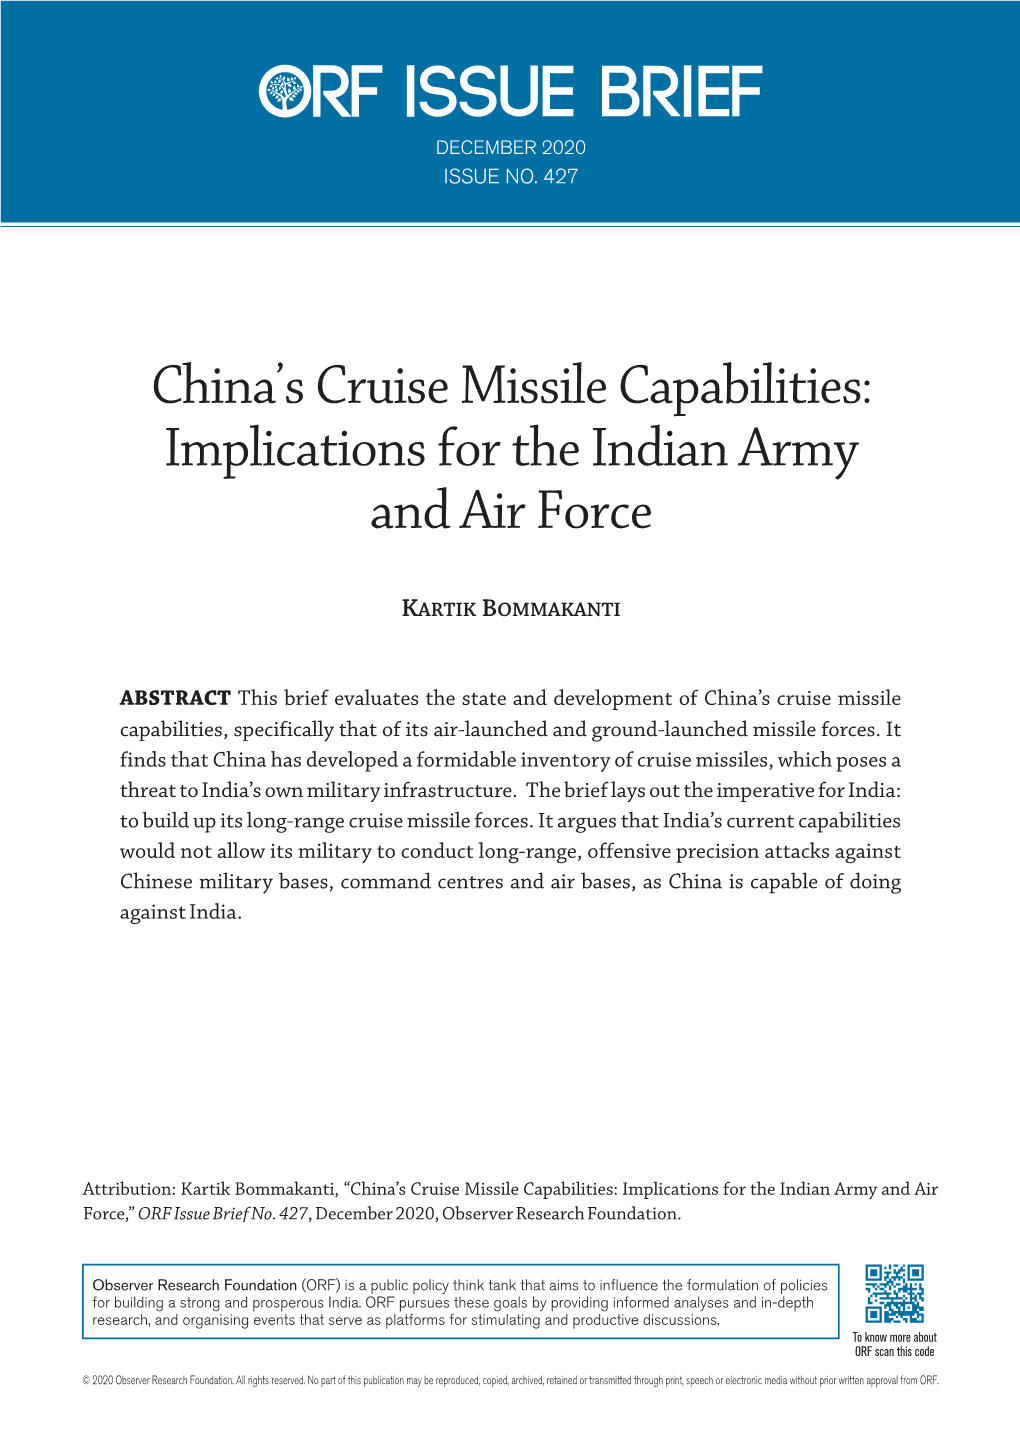 China's Cruise Missile Capabilities